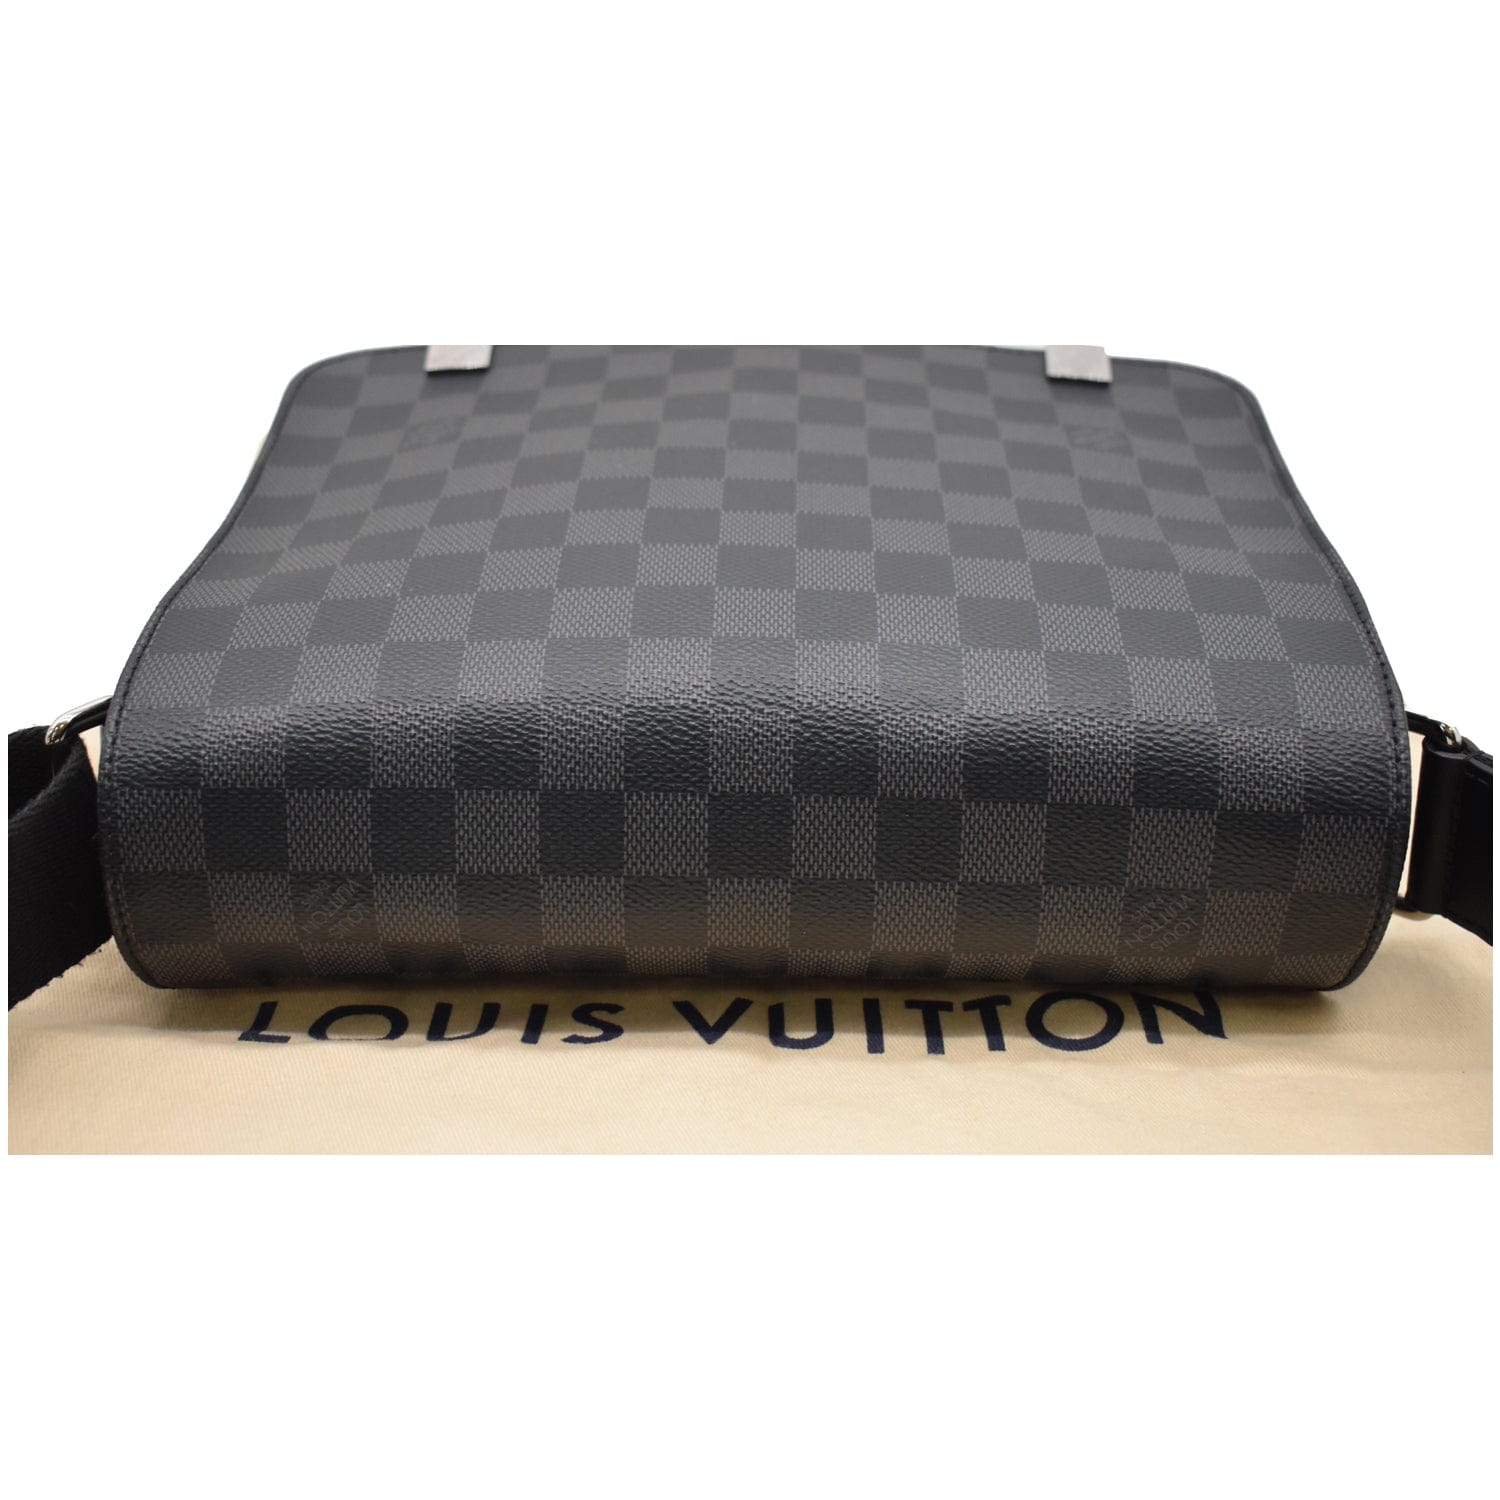 Sell Louis Vuitton Damier Graphite District PM Bag - Black/Grey